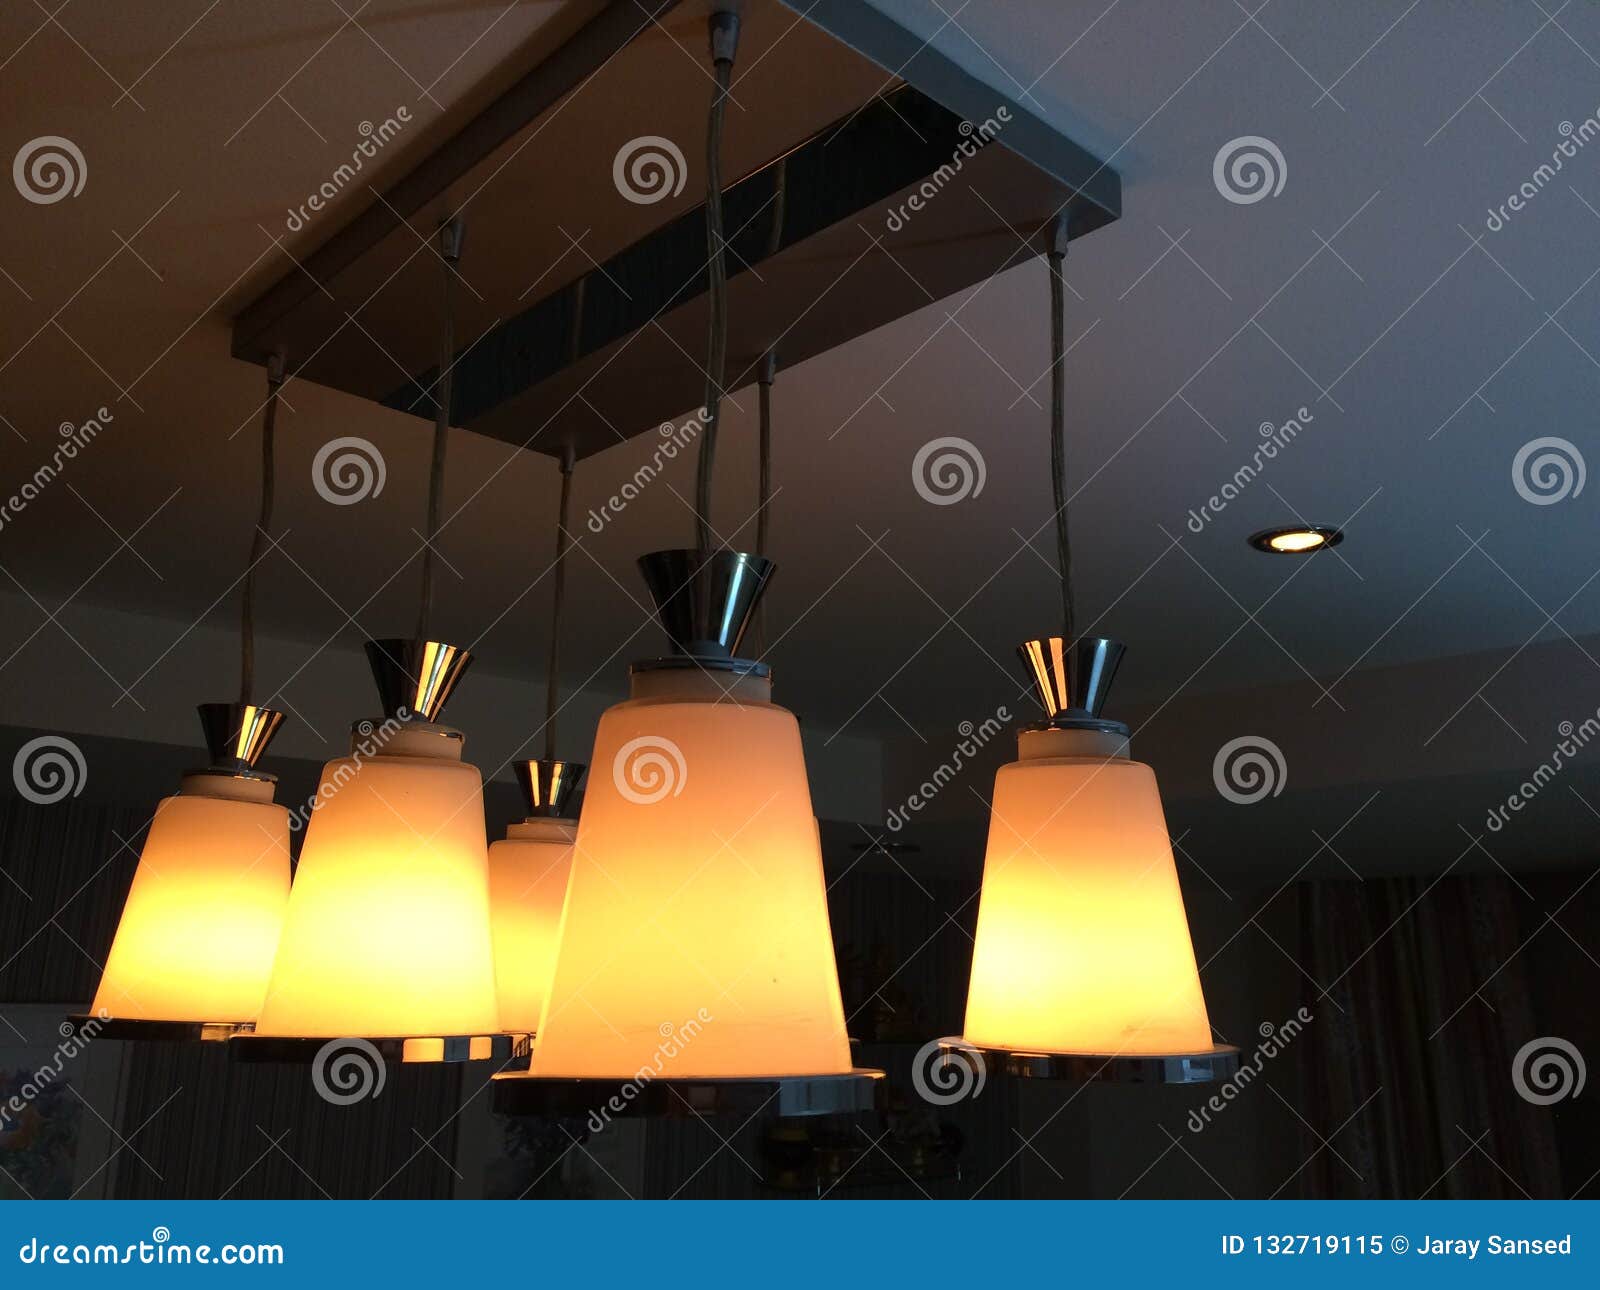 Lights Shine Bright The Lamps Provide Illumination At Night